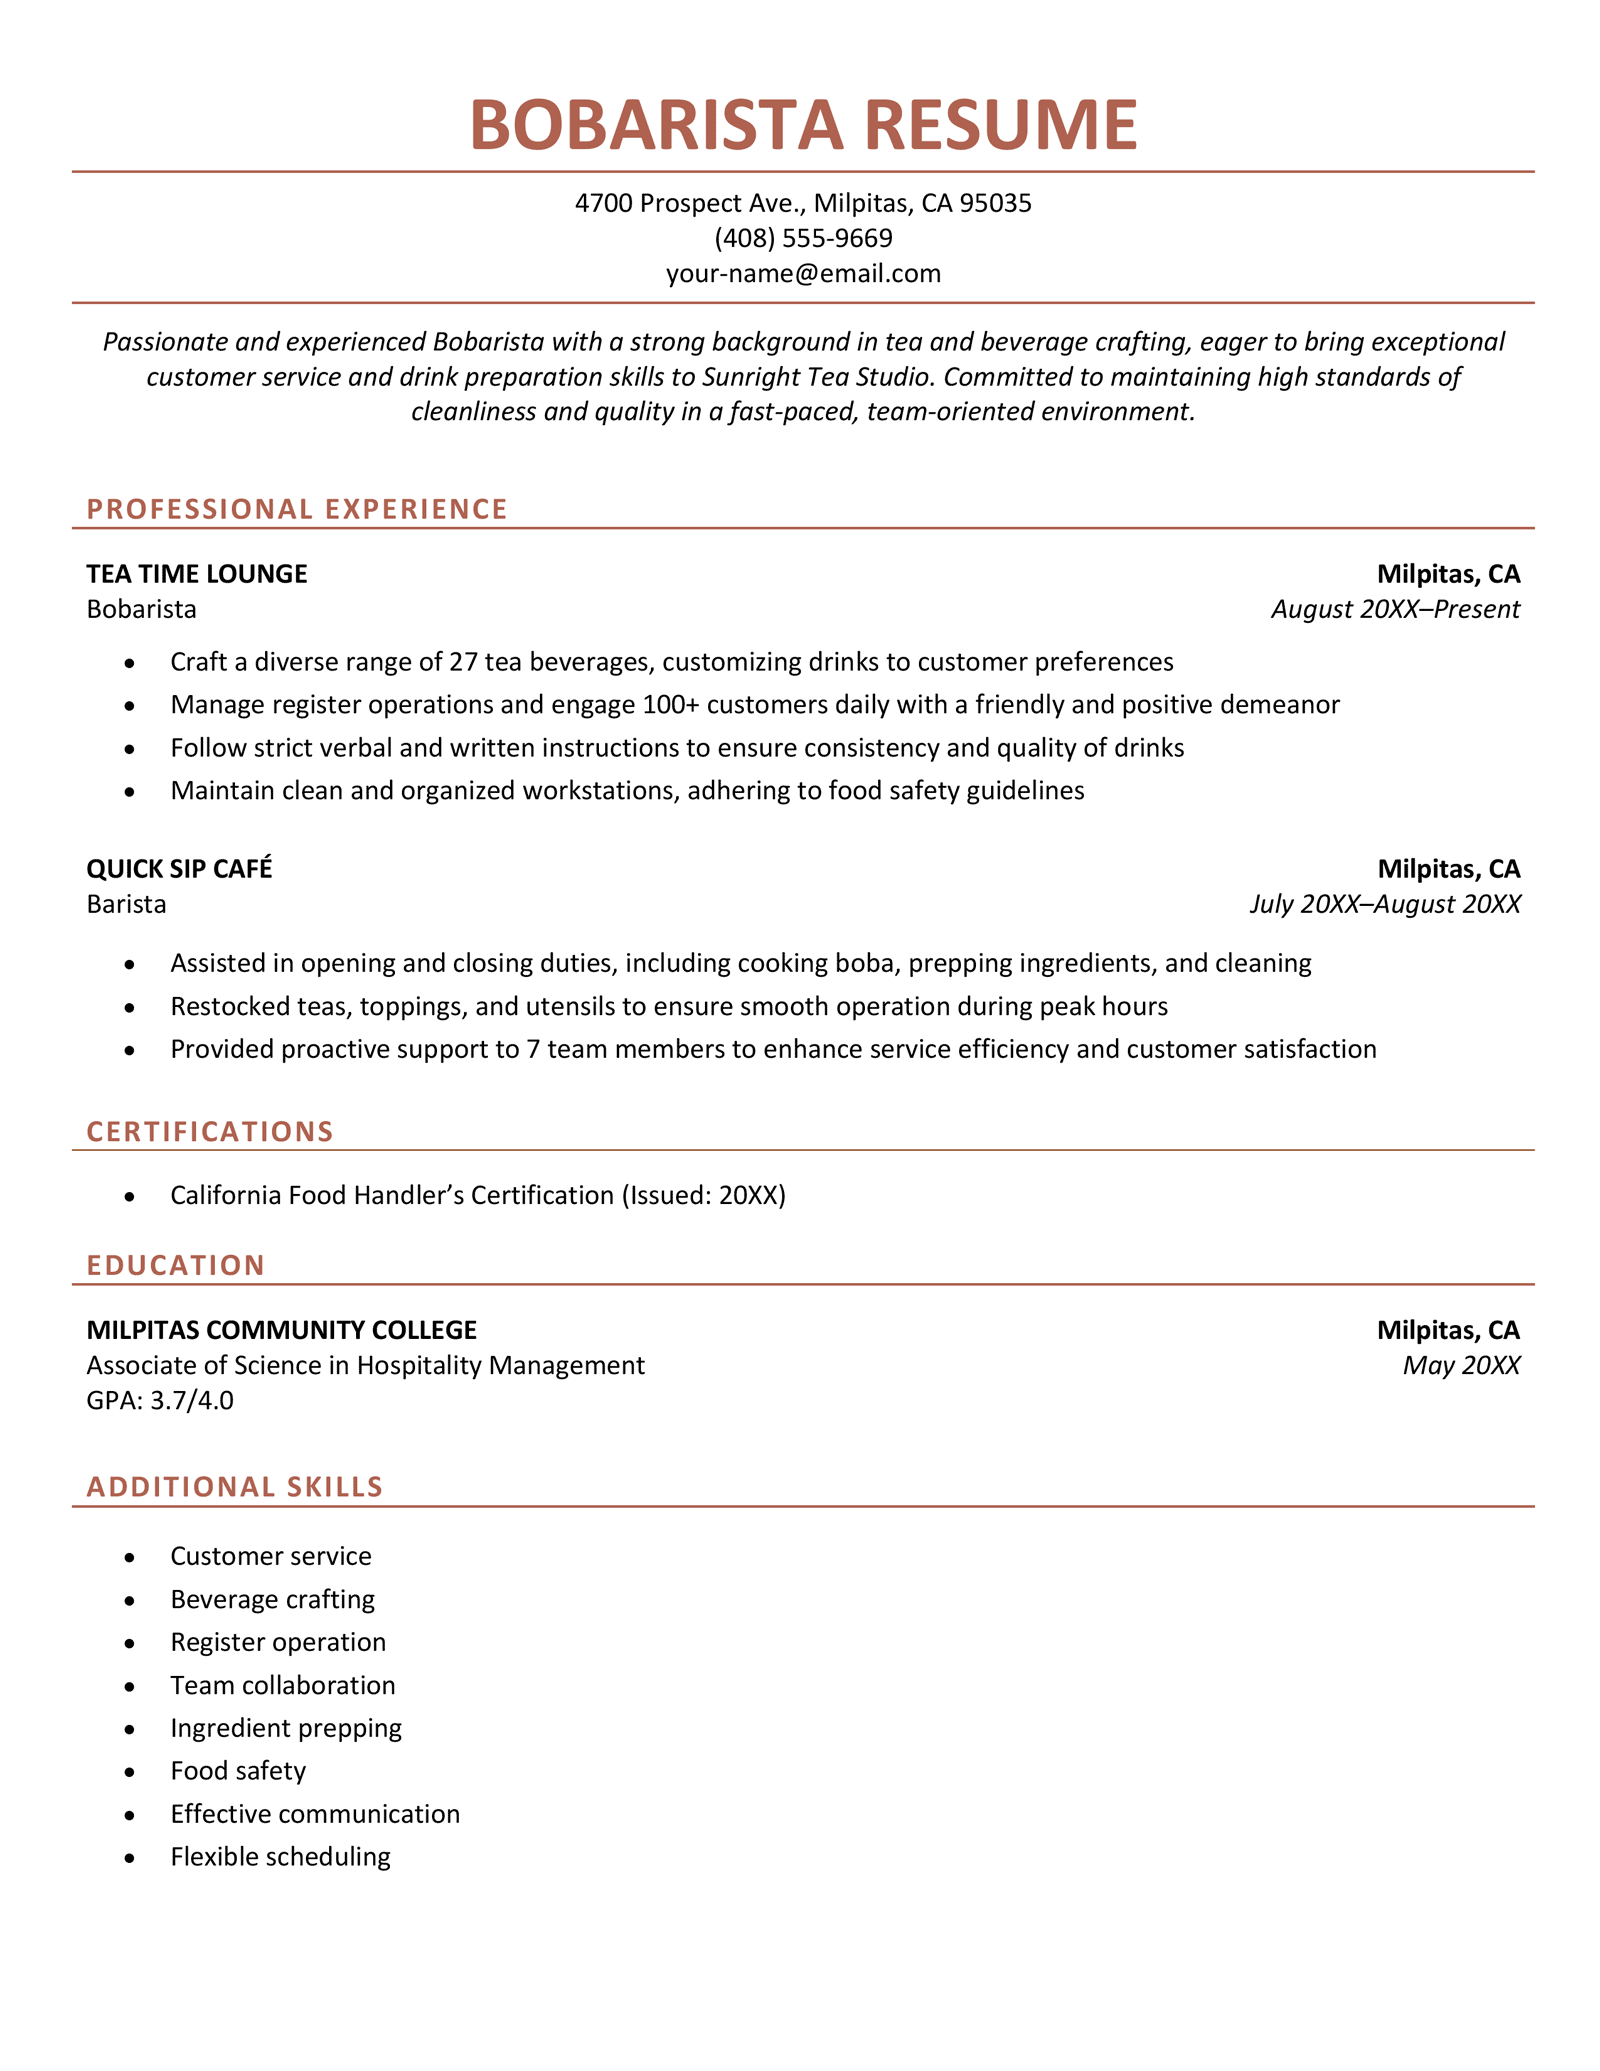 A boba resume example.